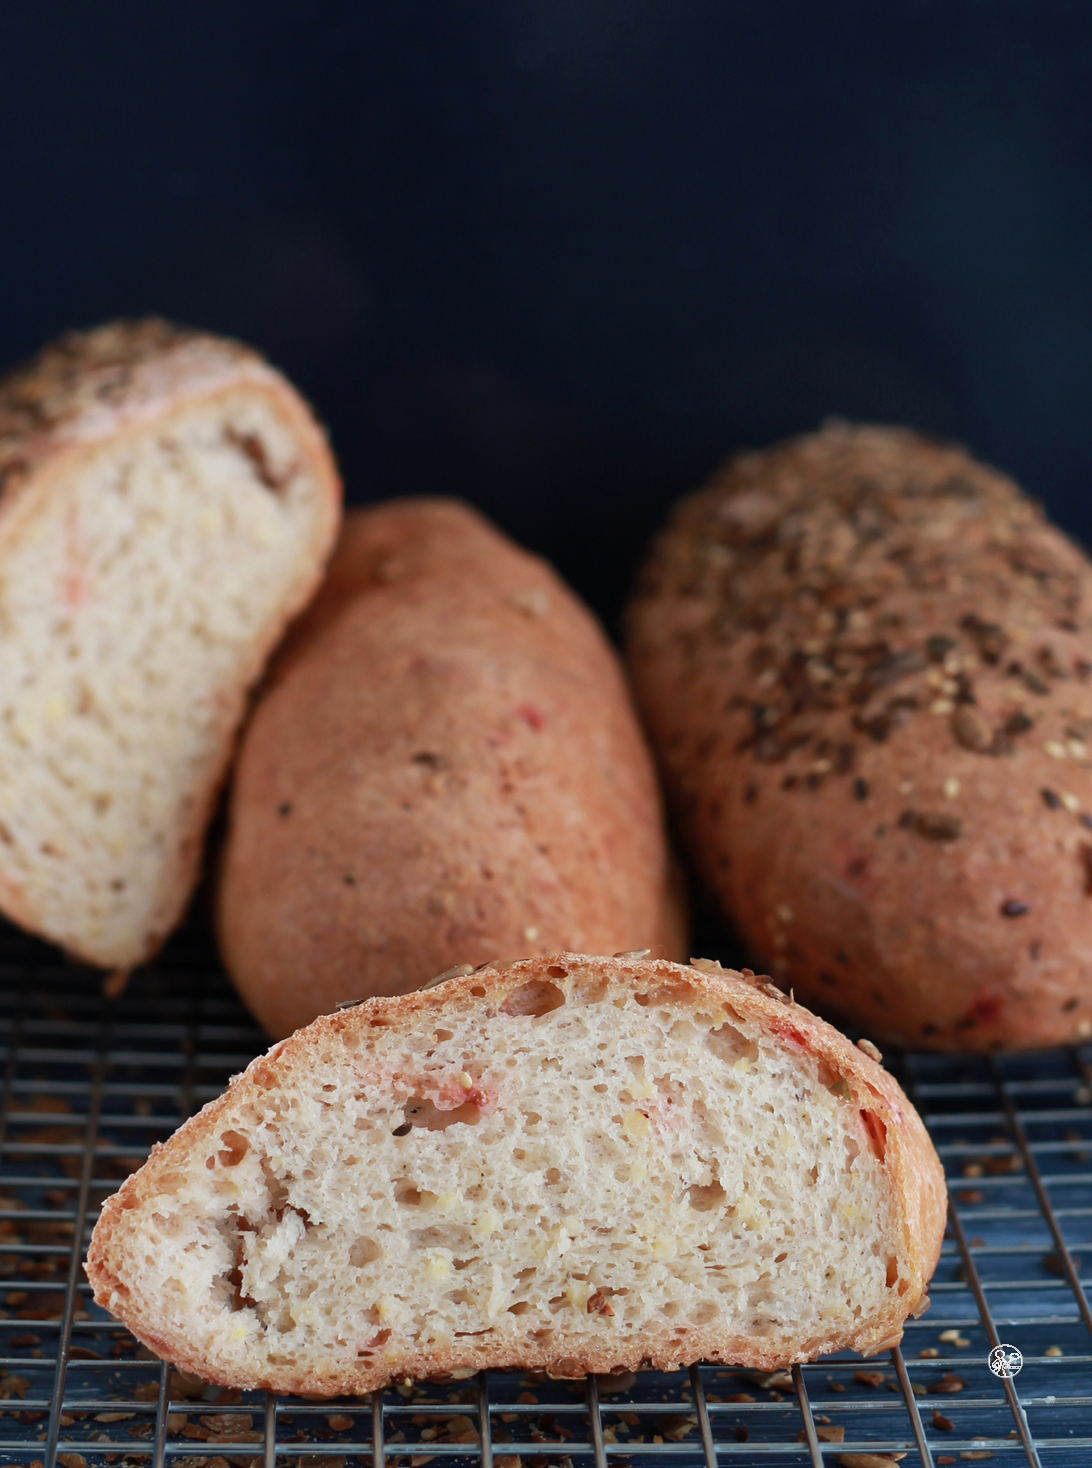 Pane al miglio senza glutine - La Cassata Celiaca